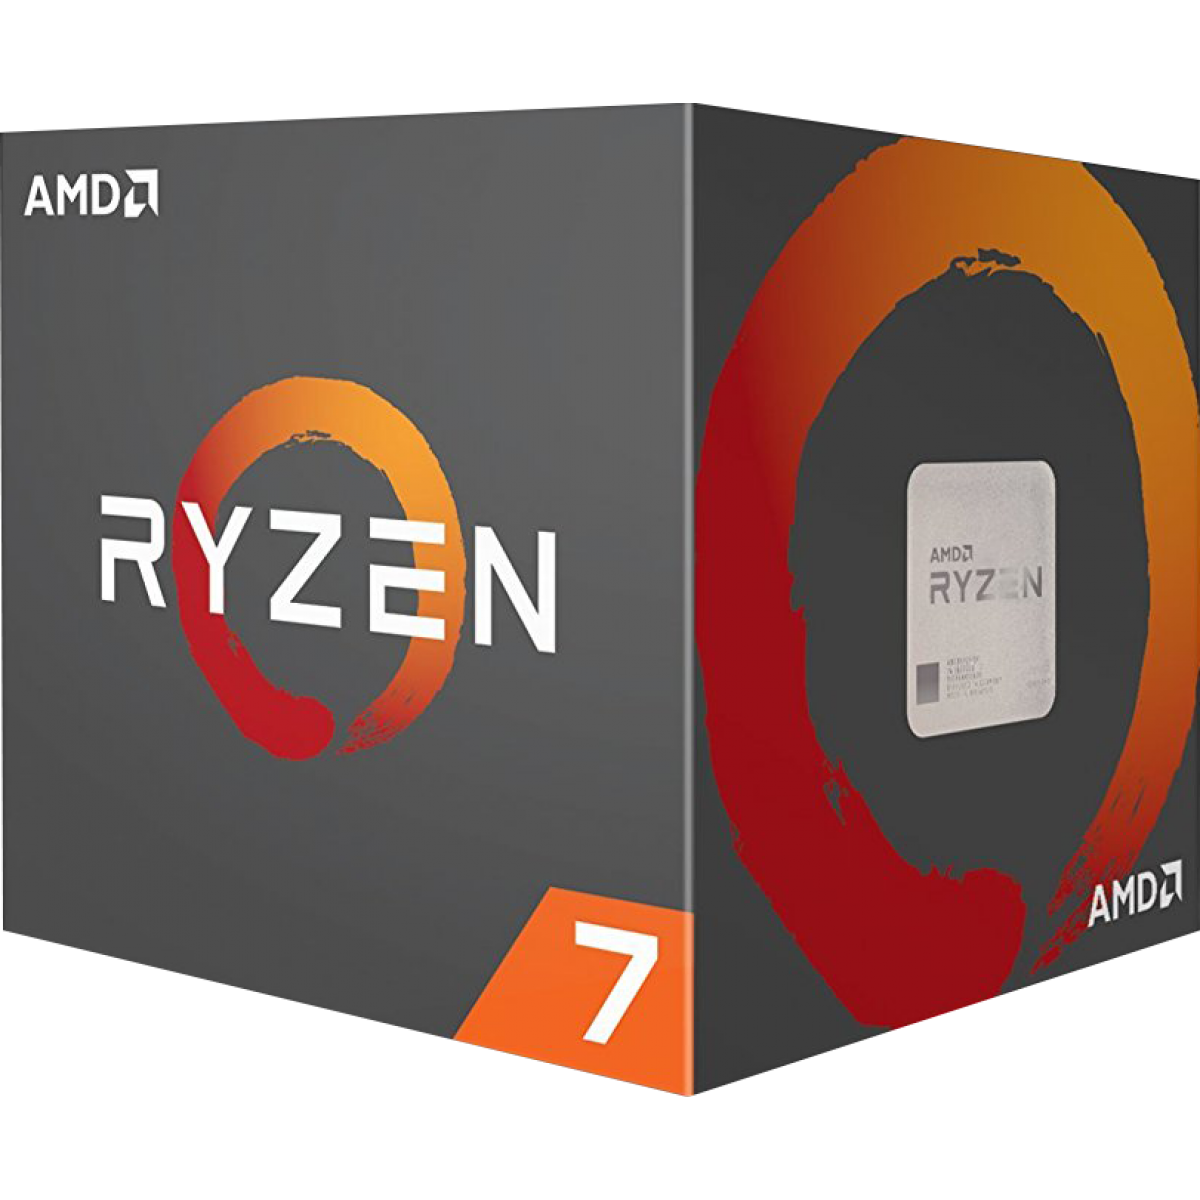 Processador AMD Ryzen 7 1700 3.0GHz (3.7GHz Turbo), 8-Cores 16-Threads, Cooler Wraith Spire com Led, AM4 YD1700BBAEBOX, S/ Video